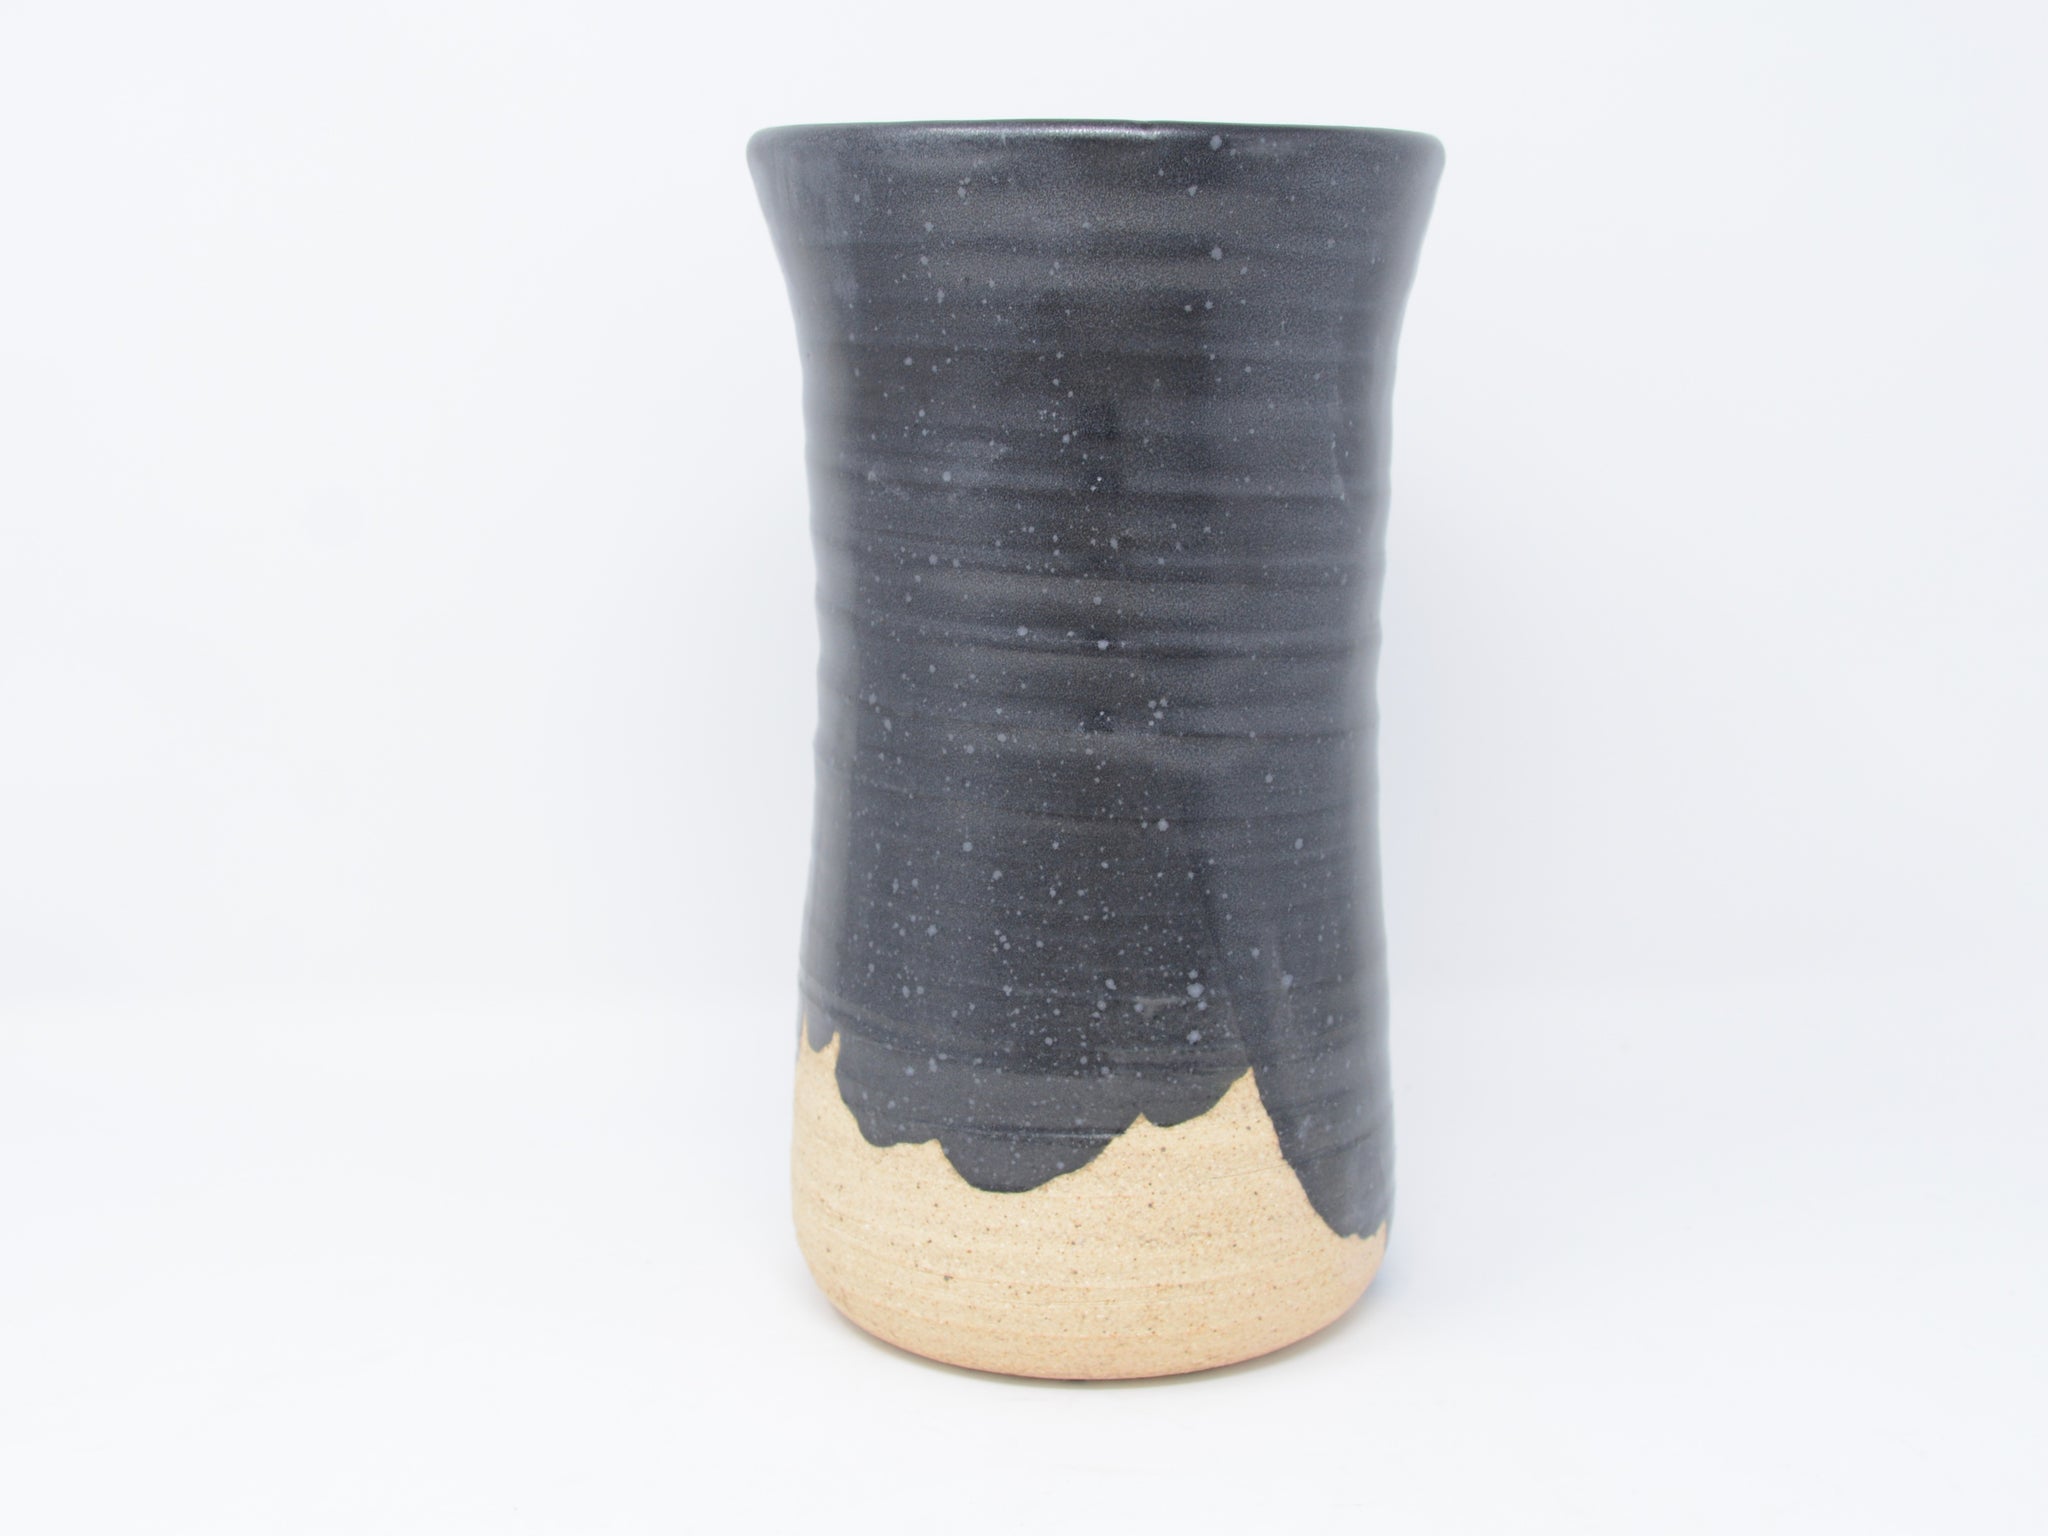 Black Vase No. 2